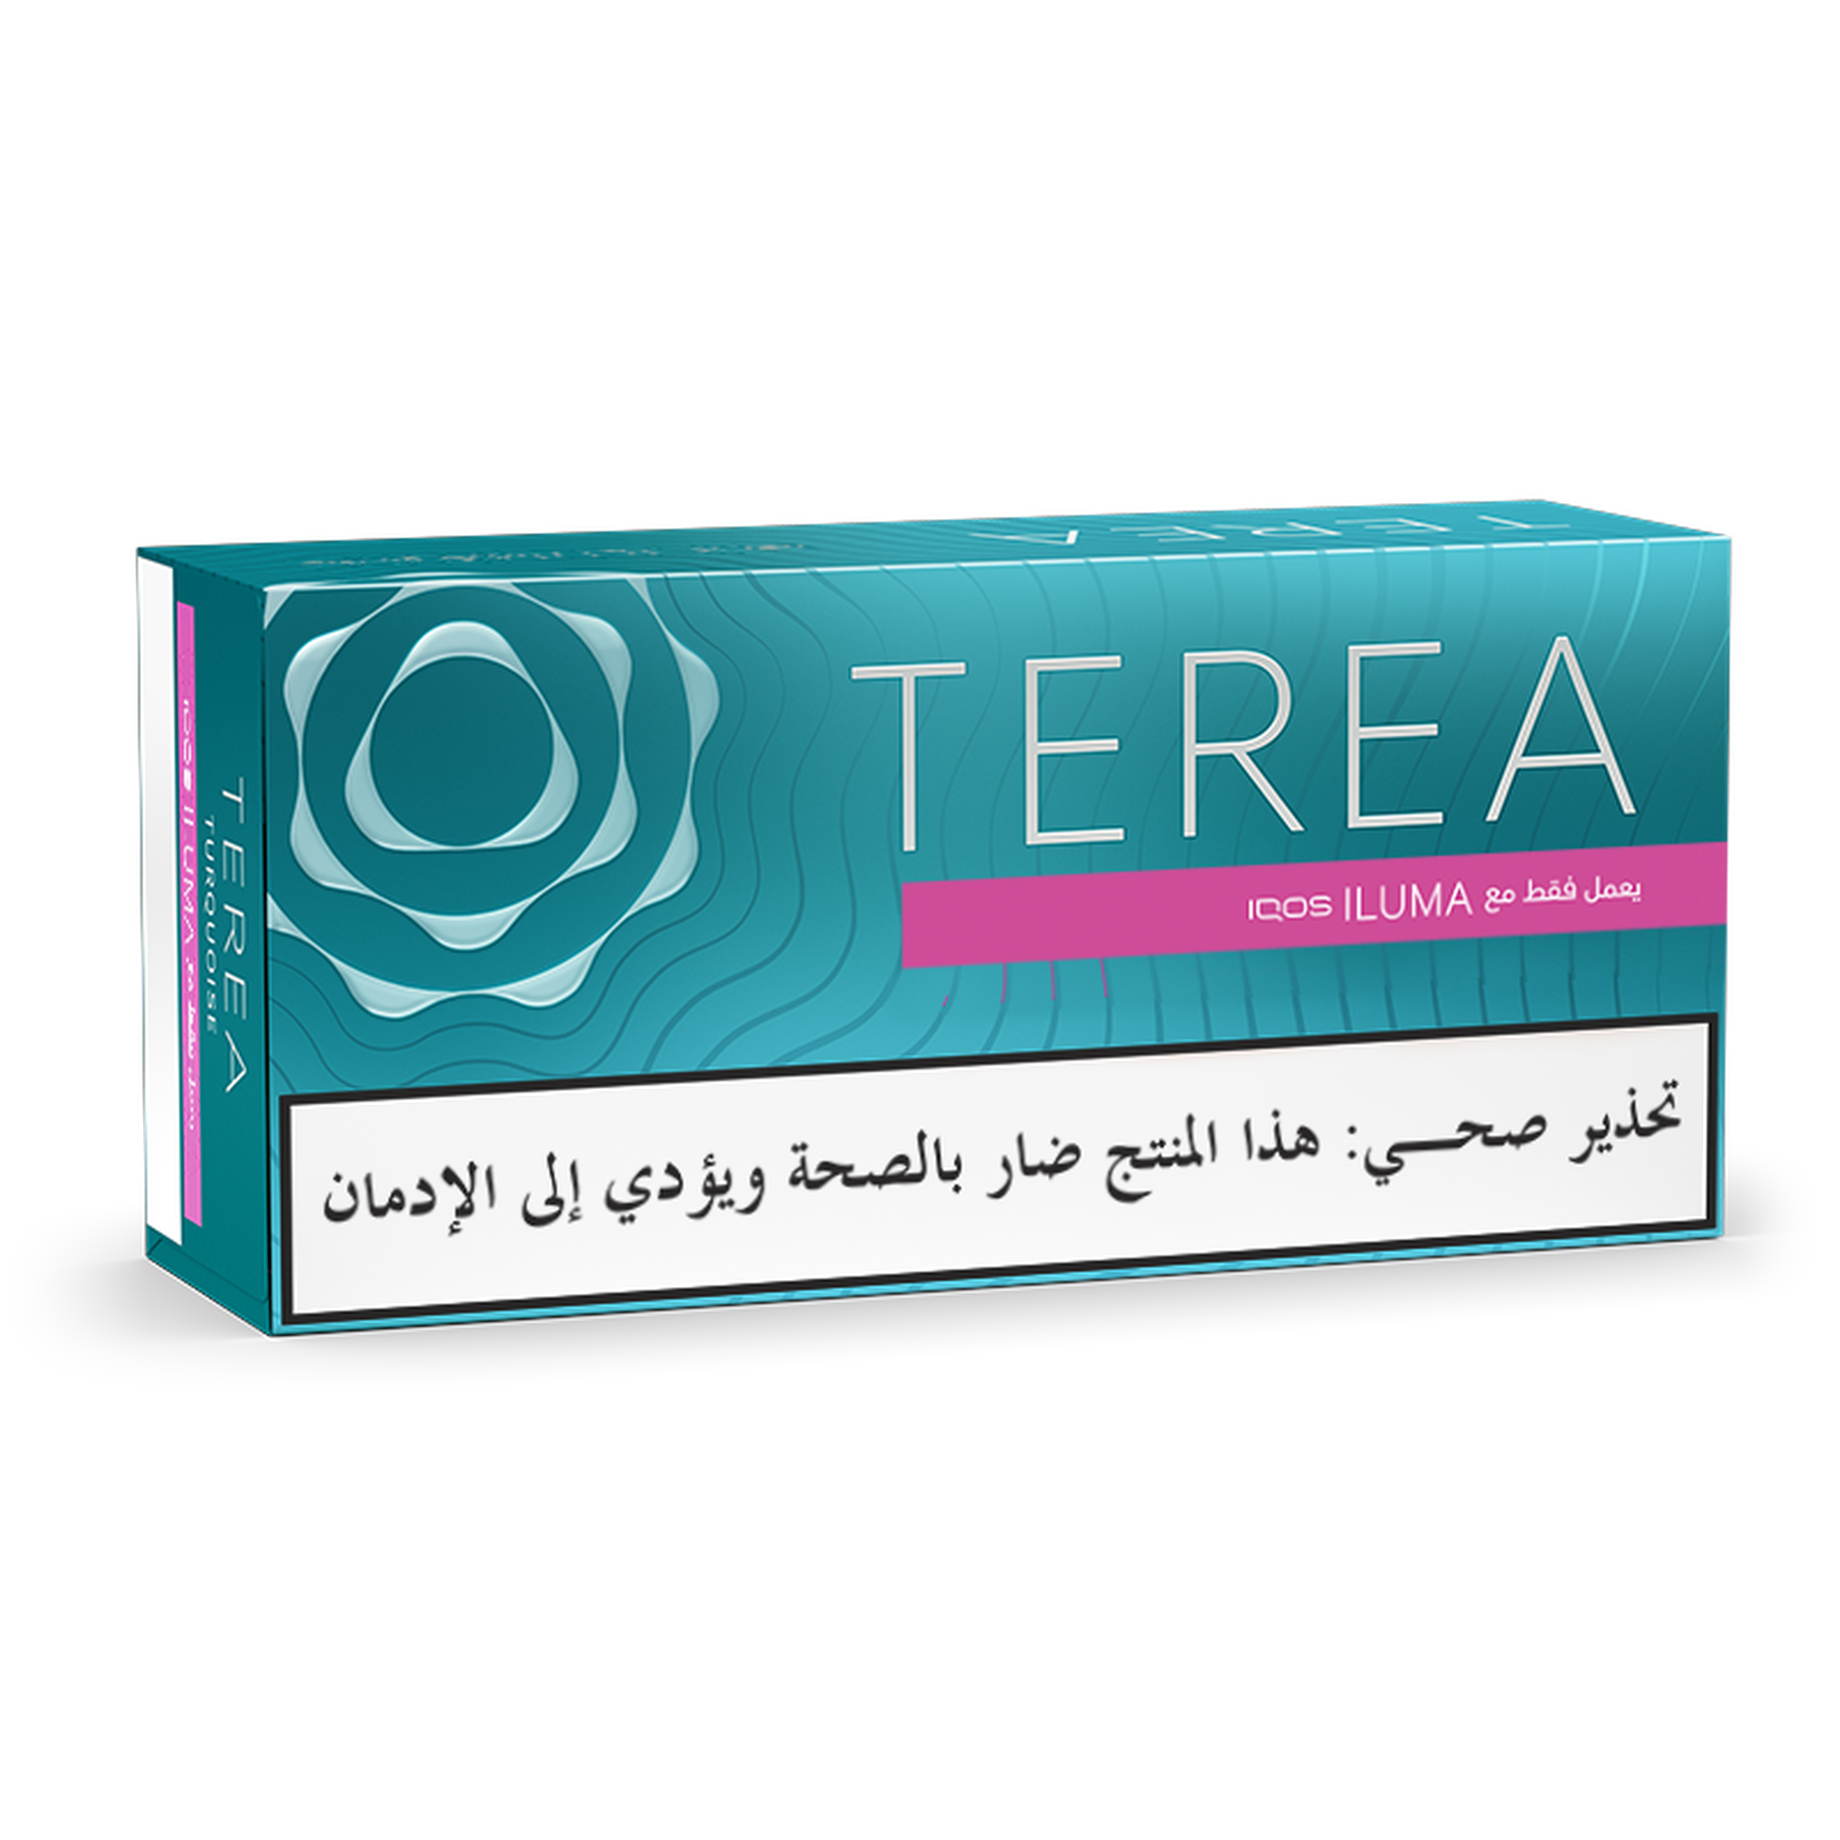 Terea Turquoise Label Carton of 10 Packs - كروز ‏تيرا تركواز